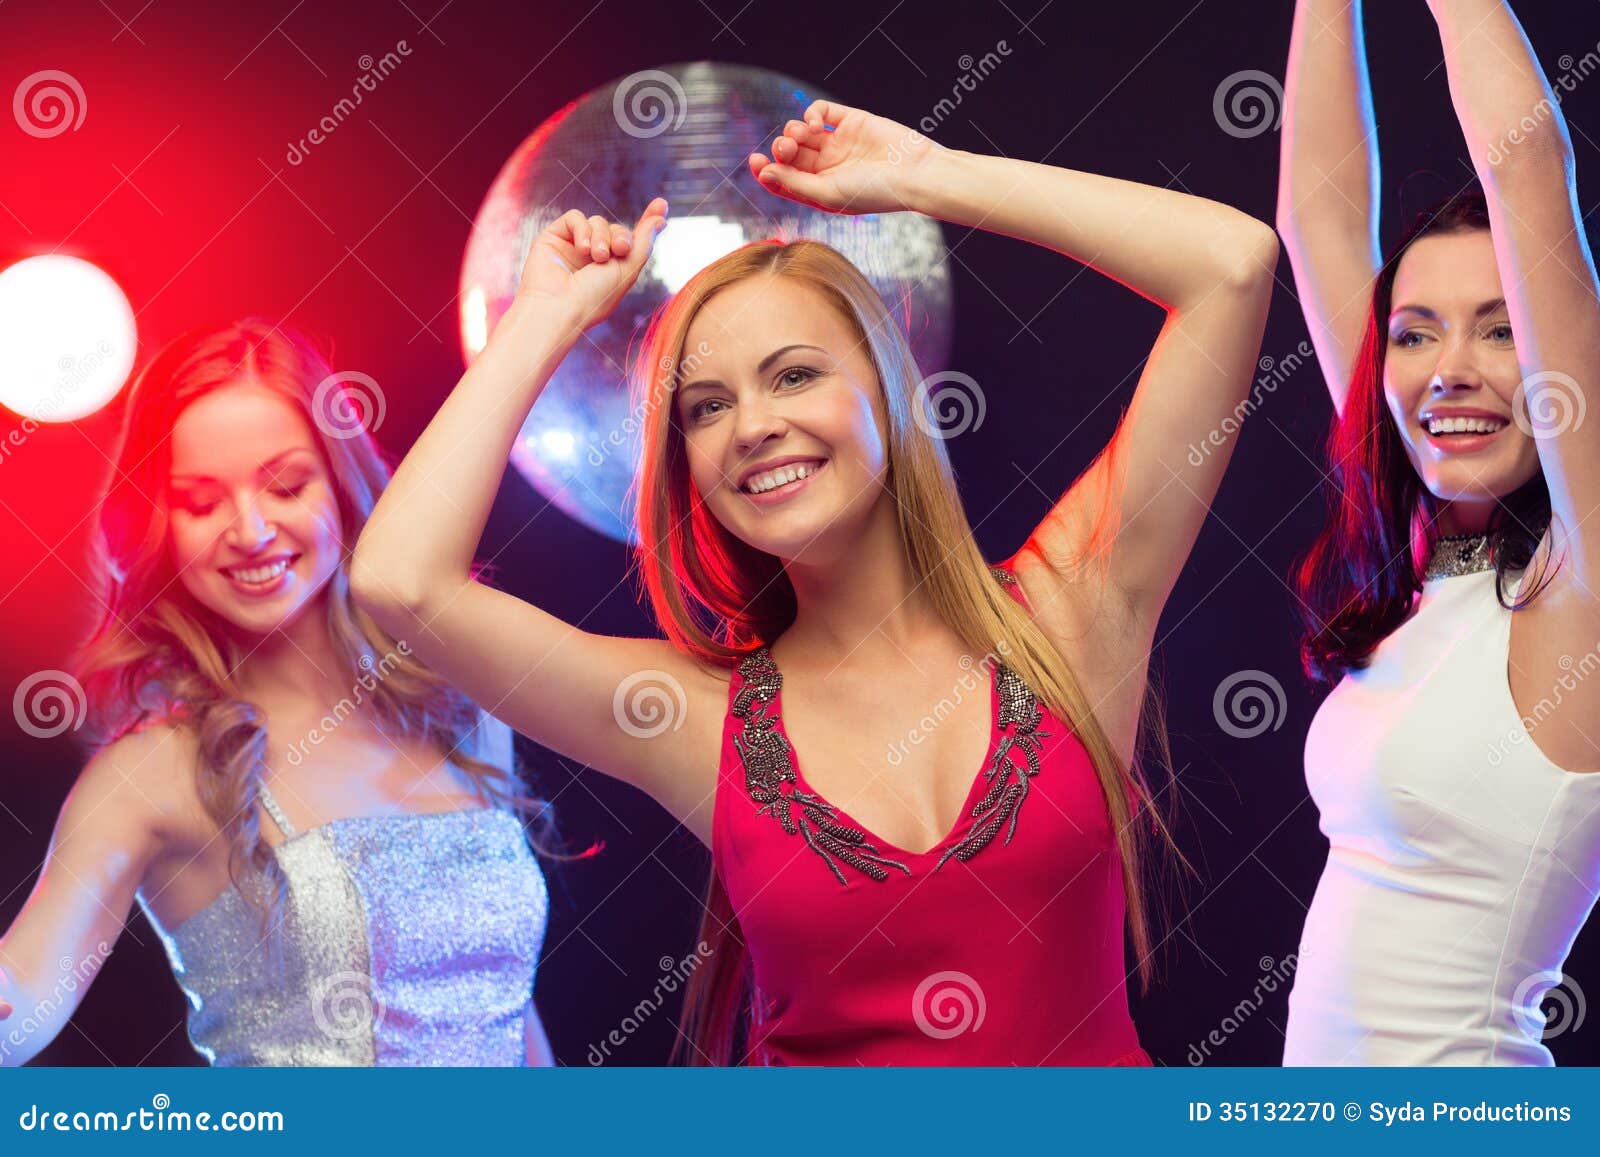 New party member! Tags: dance movie 90s friends hug happy dance best friends  girlfriends baps sisterhood natalie …